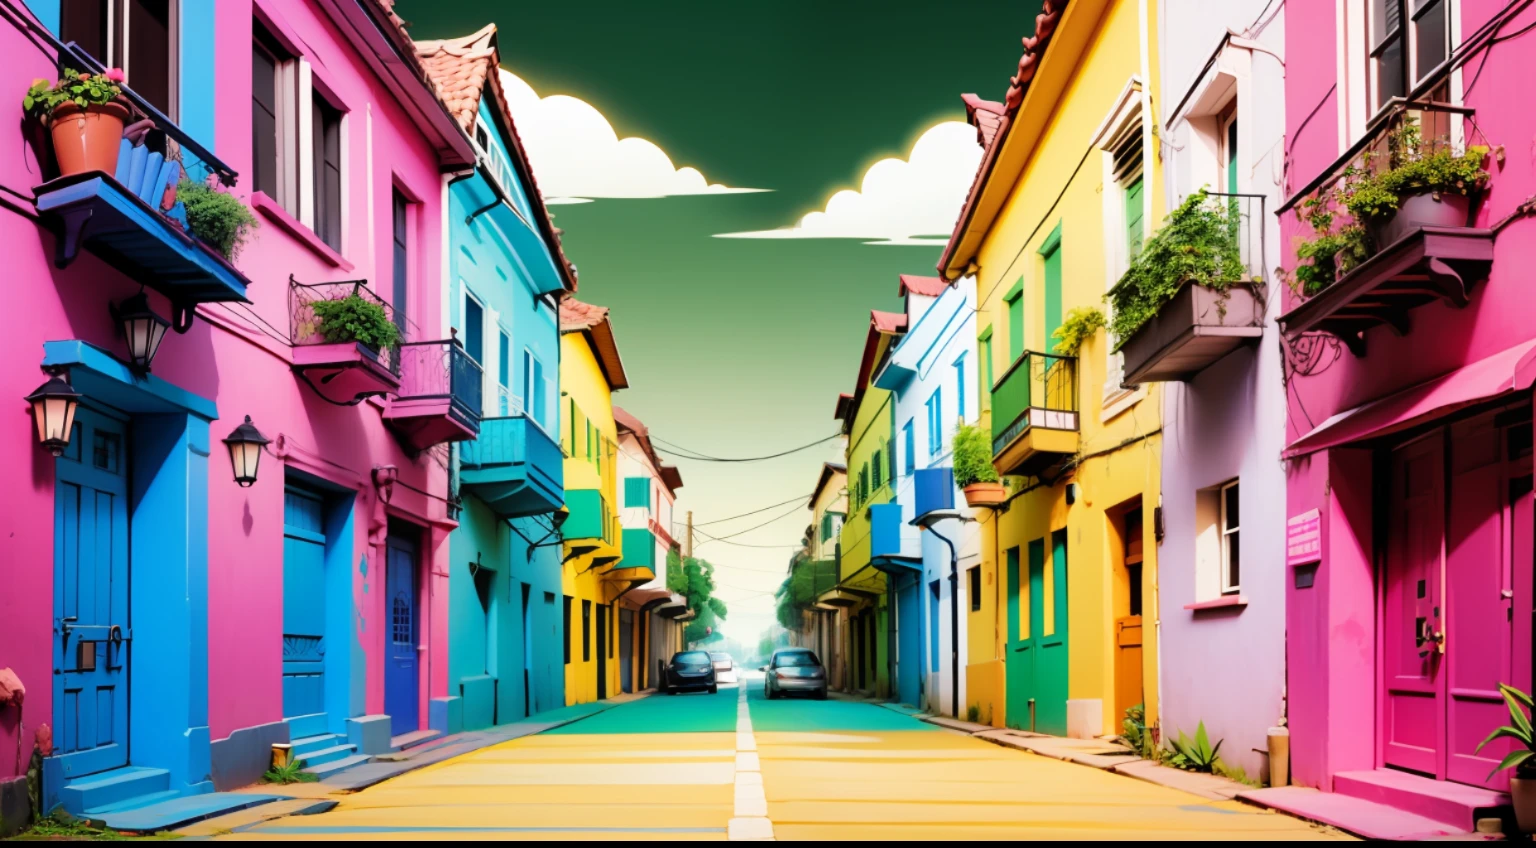 Fundo de papel de parede com elementos do samba brasileiro multicolorido